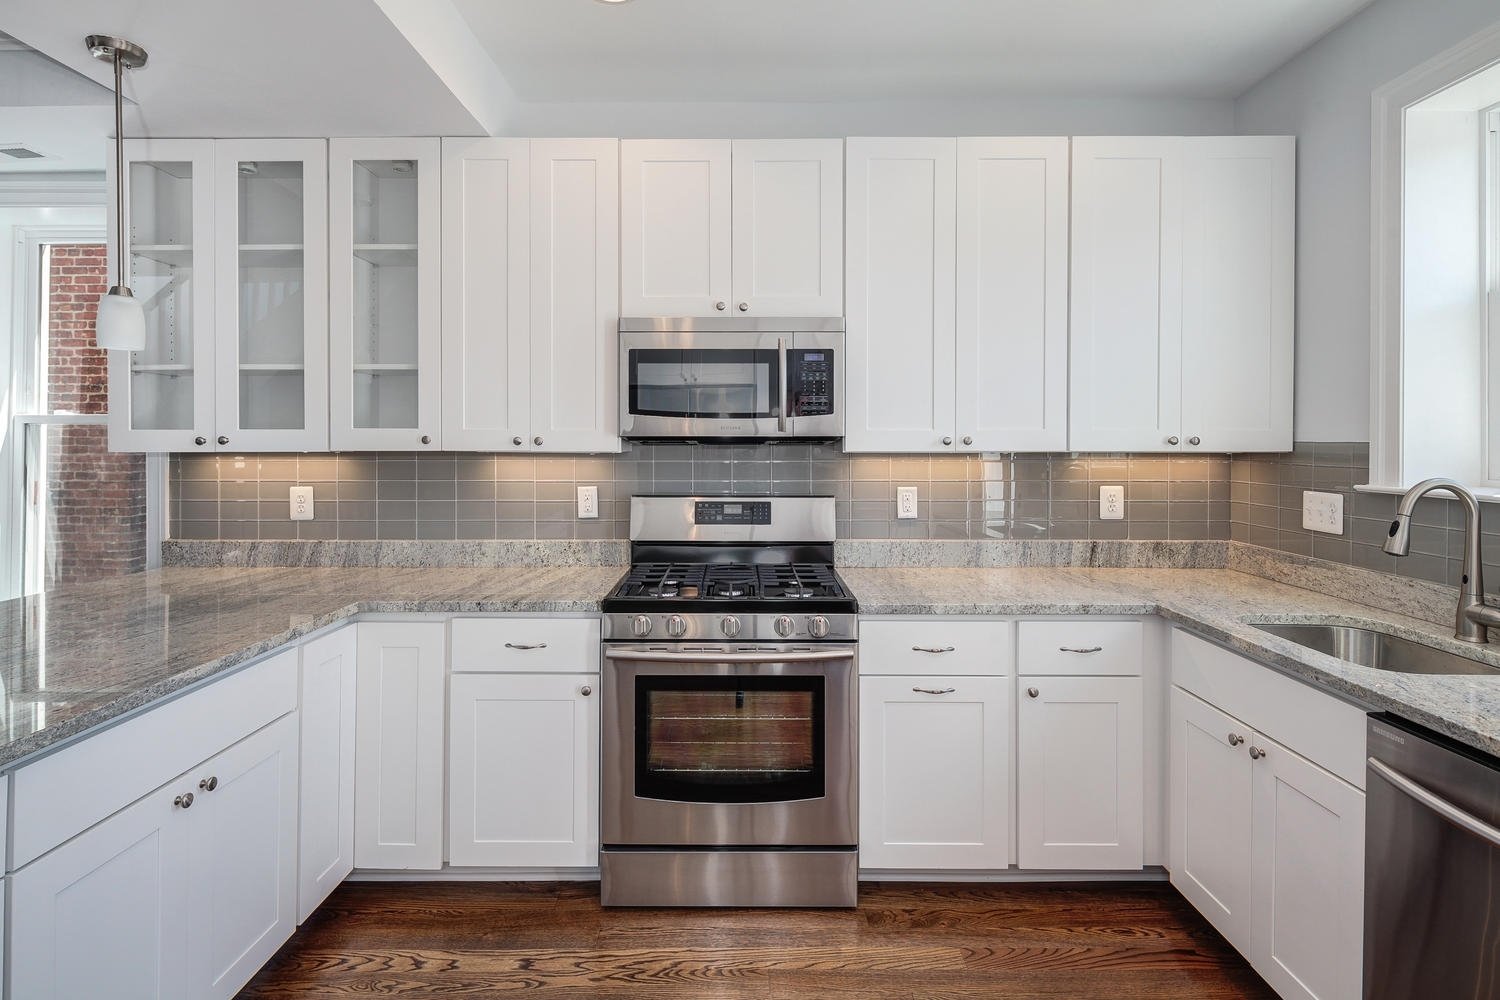 10 Fashionable Kitchen Tile Backsplash Ideas With White Cabinets white kitchen tile backsplashes your money bus design diy 2023